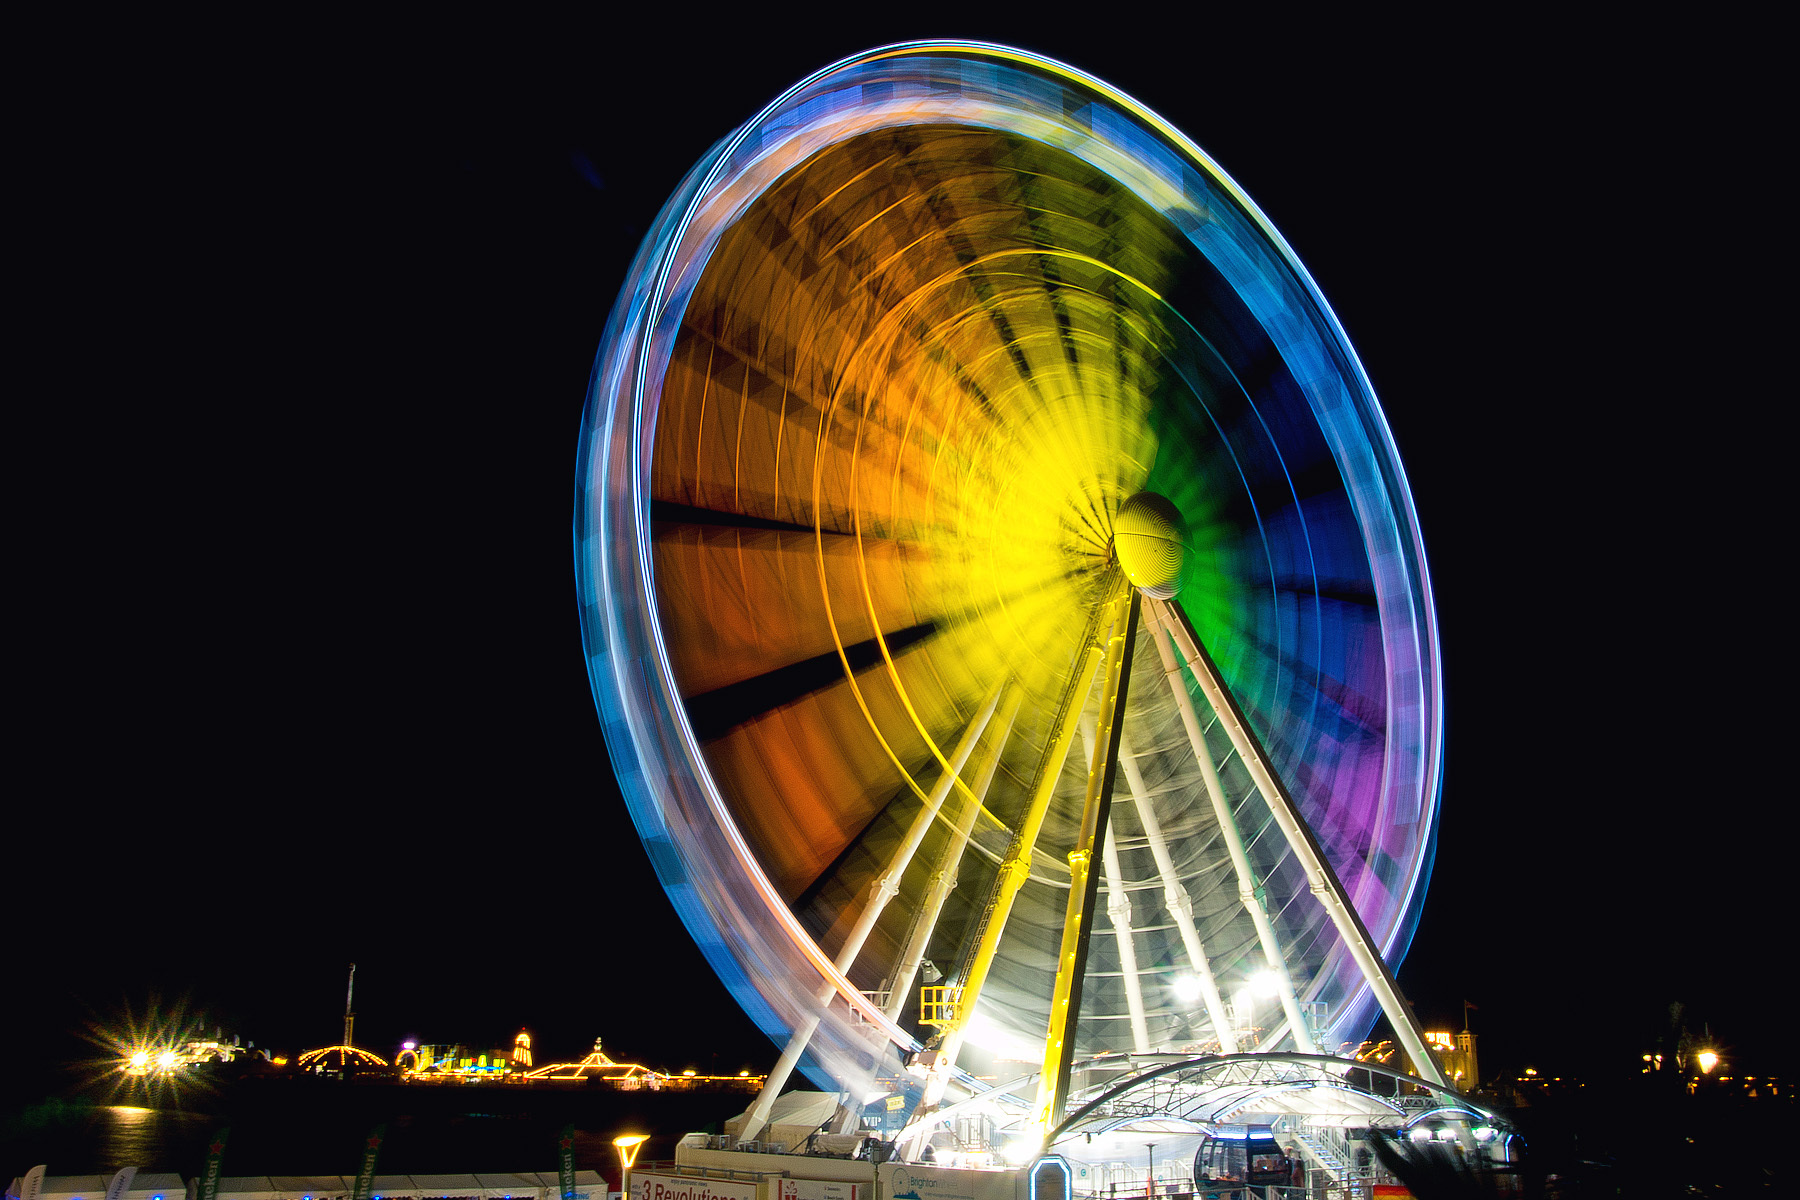 Brighton Wheel, Brighton, East Sussex, England